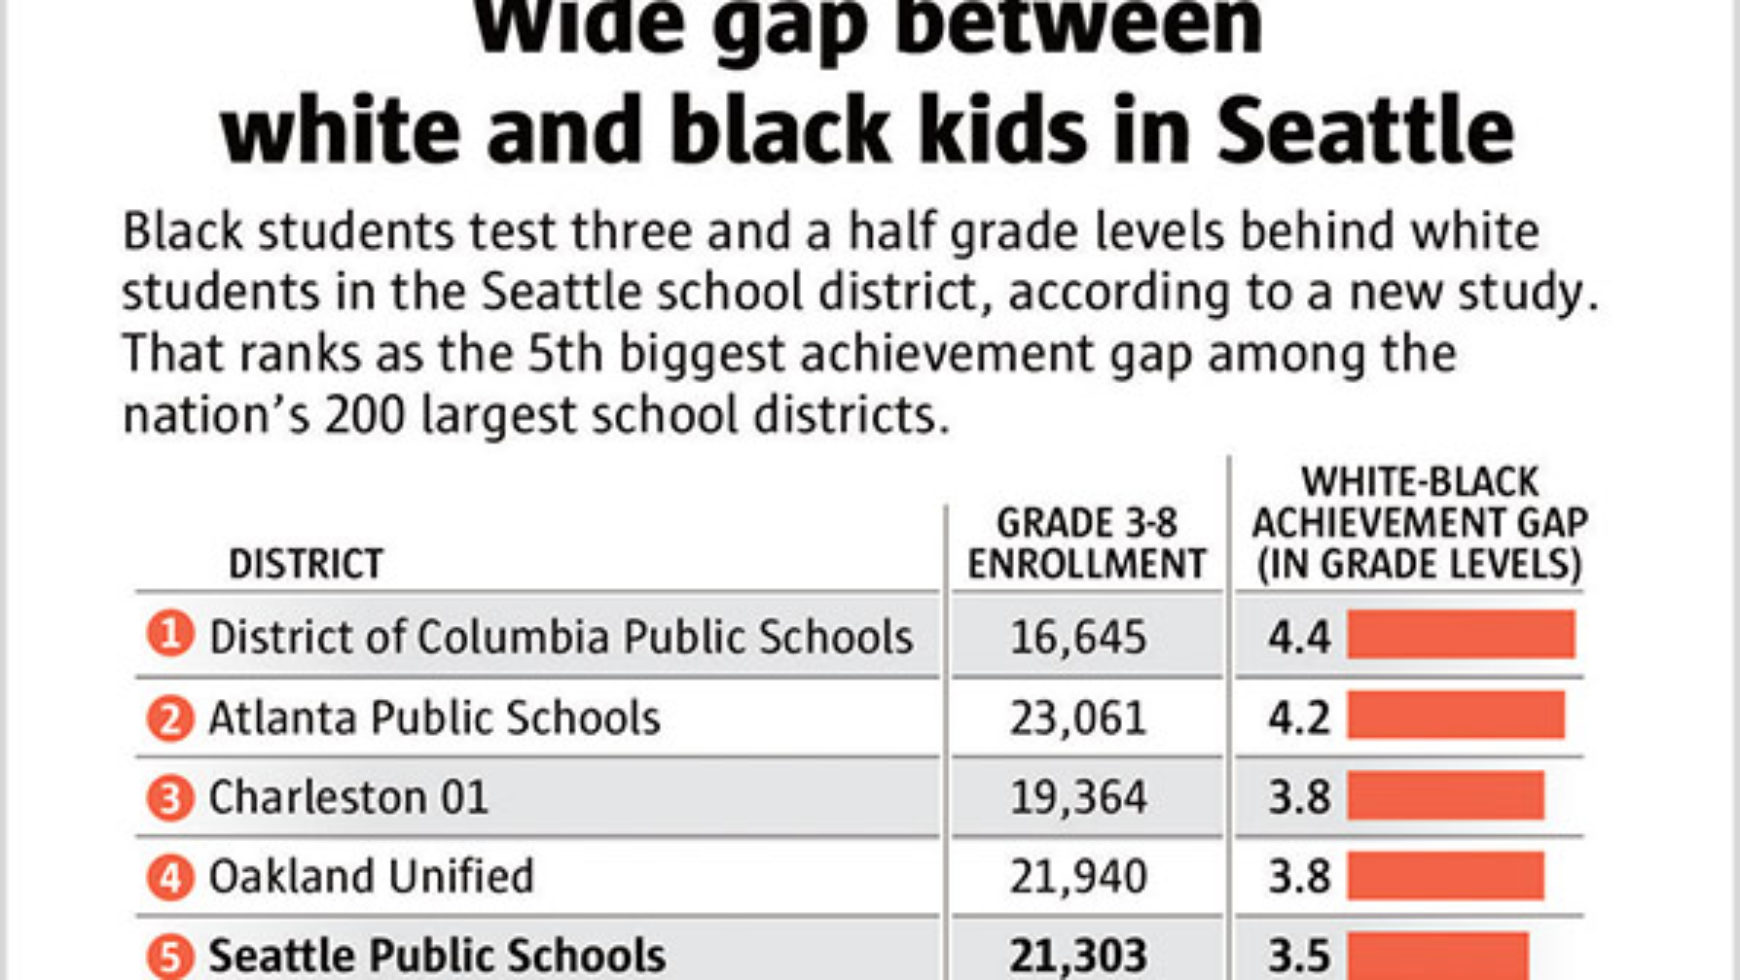 Seattle schools have biggest white-black achievement gap in state